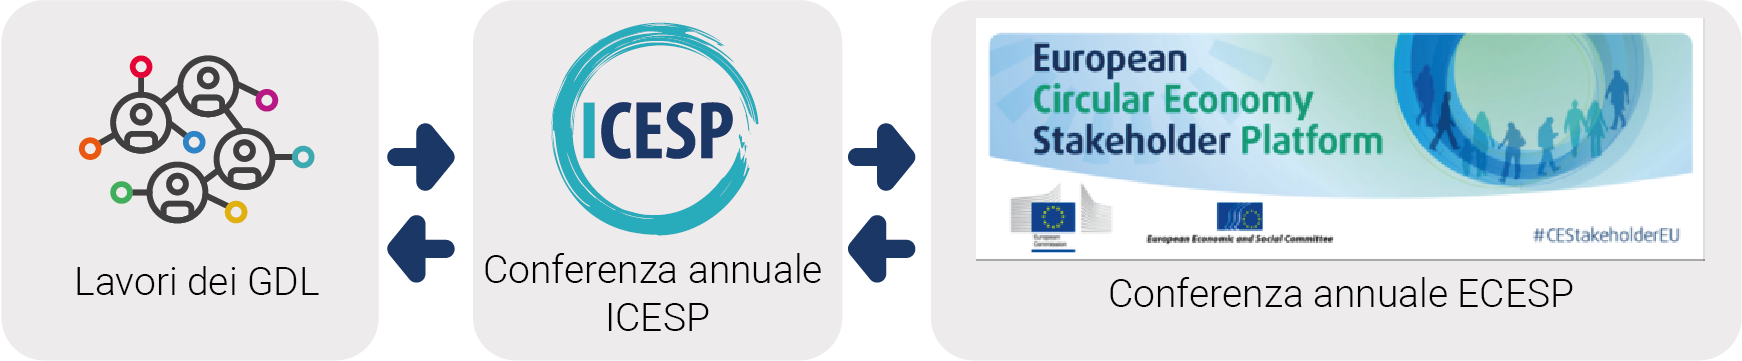 Relazione tra ICESP ed ECESP